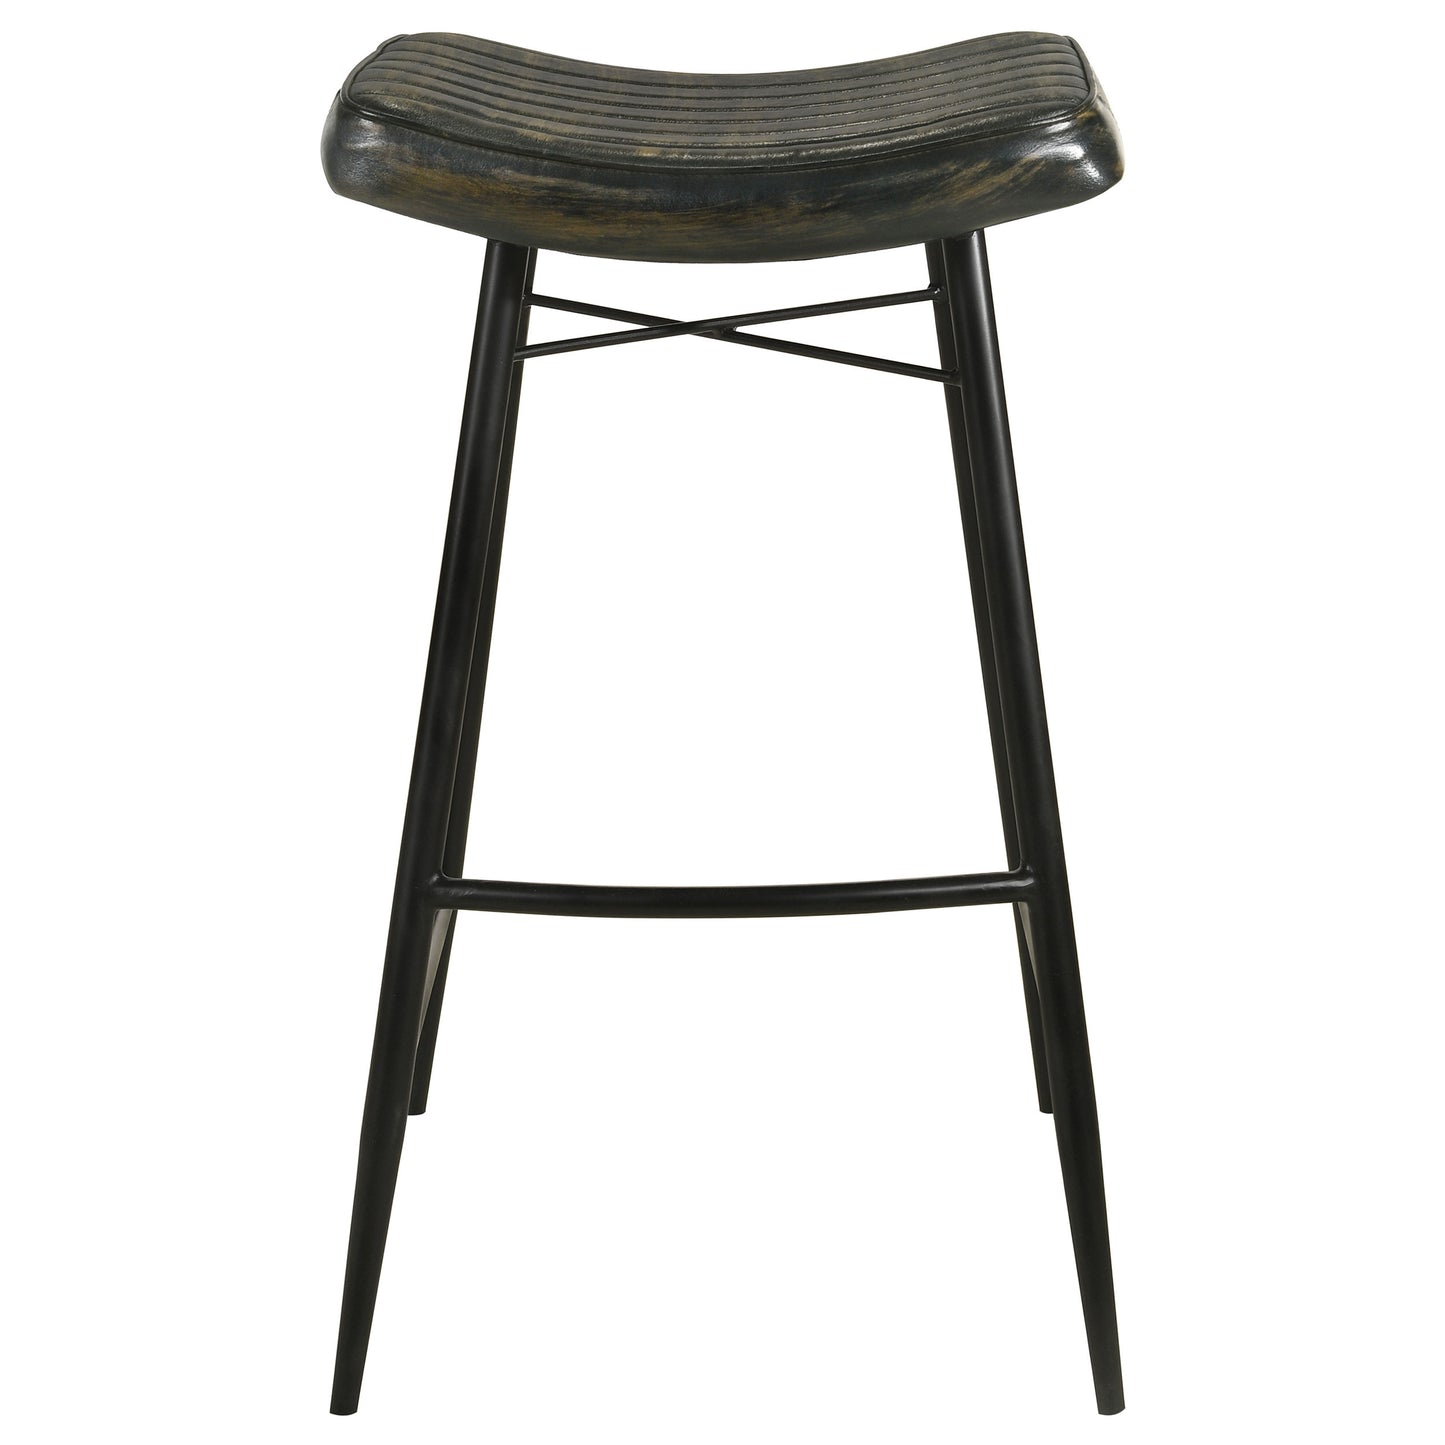 Bayu Leather Upholstered Saddle Seat Backless Bar Stool Antique Espresso and Black (Set of 2)